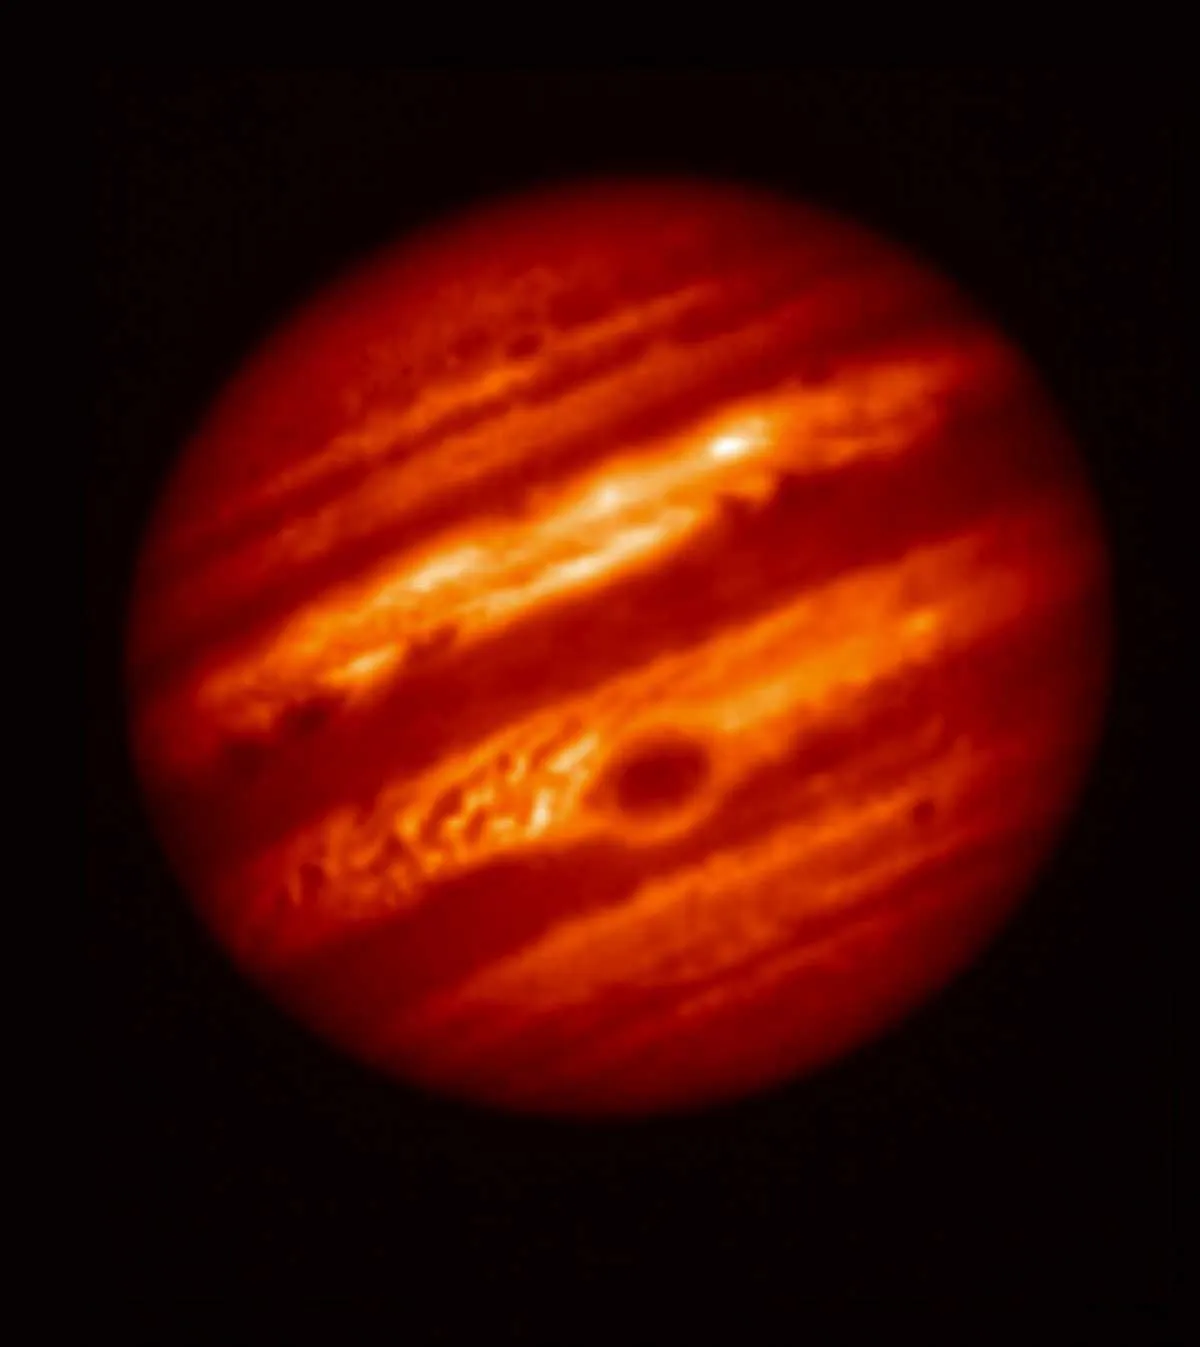 Jupiter and the Great Red Spot, mid-infrared © NAOJ/NASA/JPL-Caltech